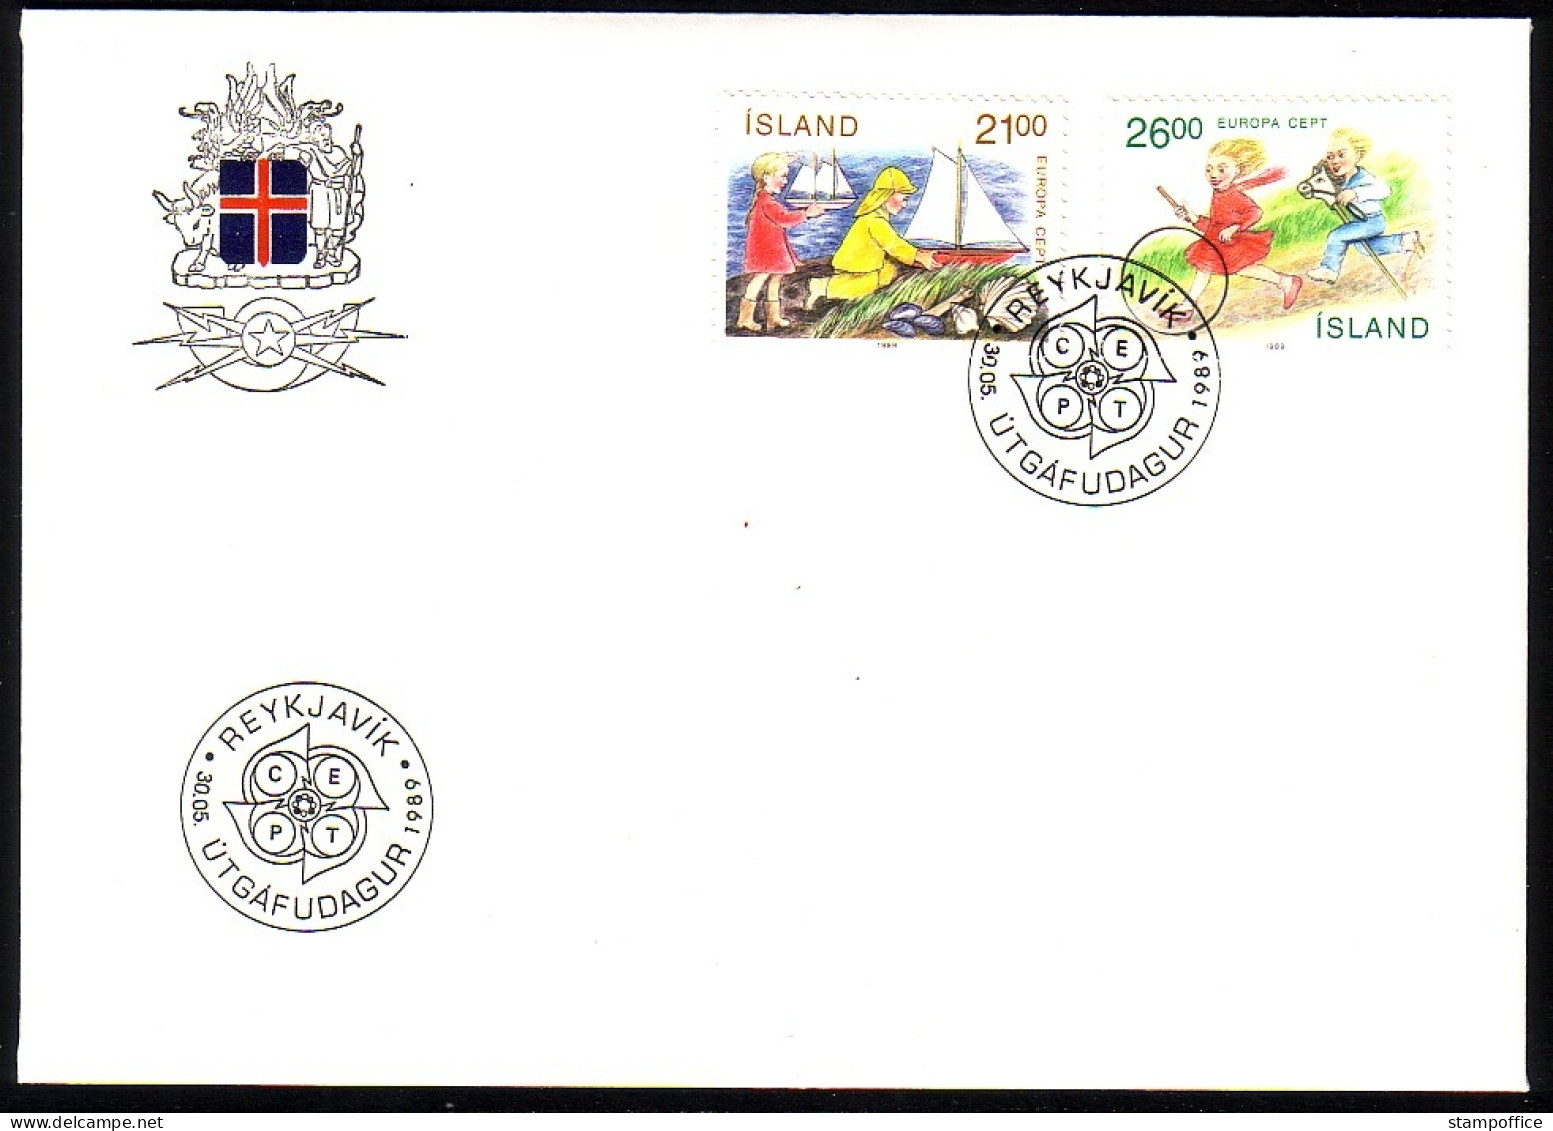 ISLAND MI-NR. 701-702 FDC EUROPA 1989 KINDERSPIELE - 1989